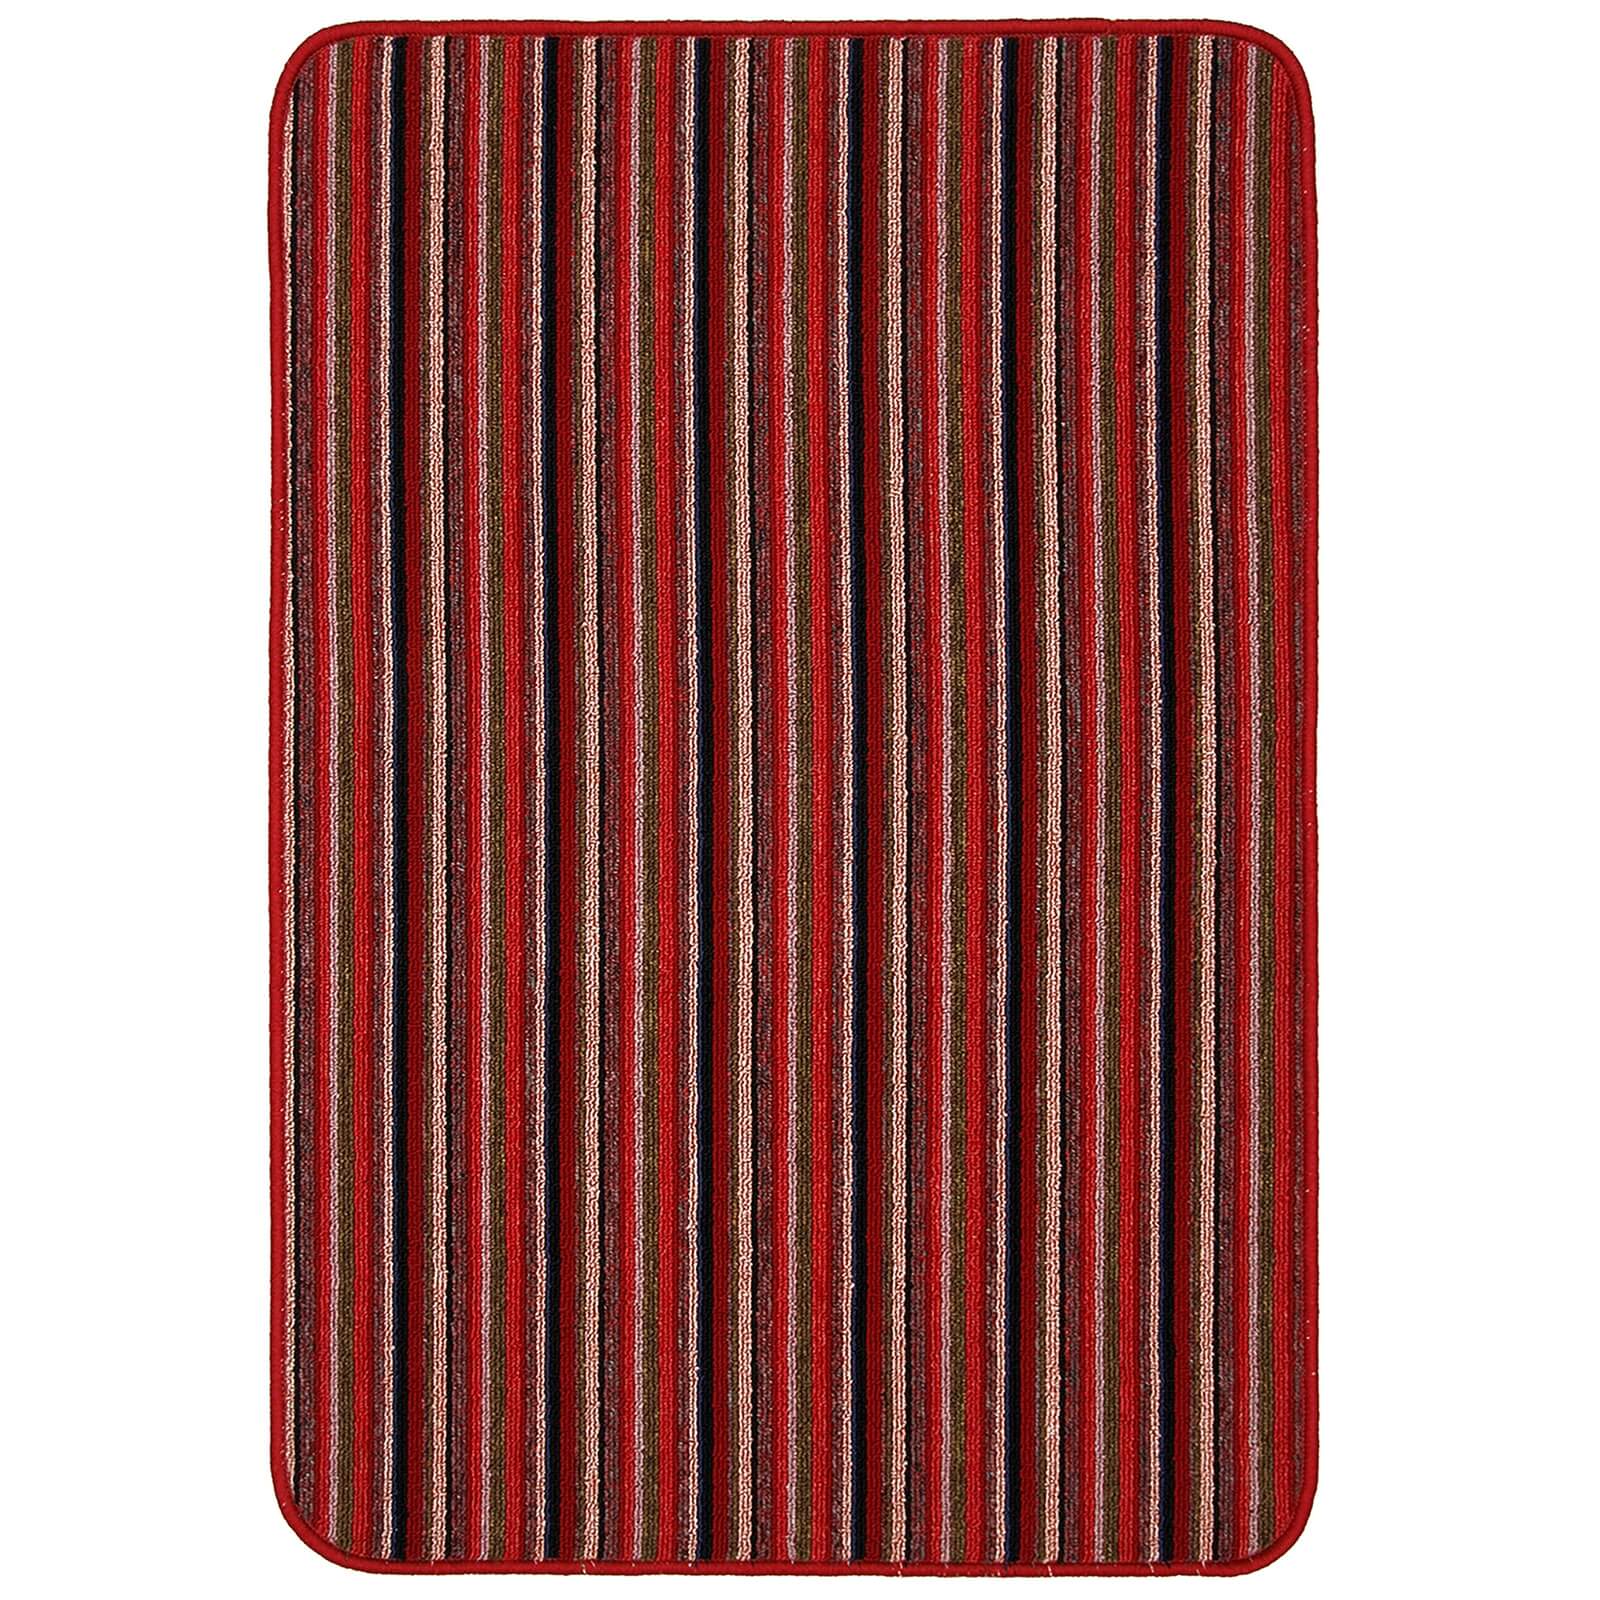 Java washable stripe mat Red - 50 x 80cm